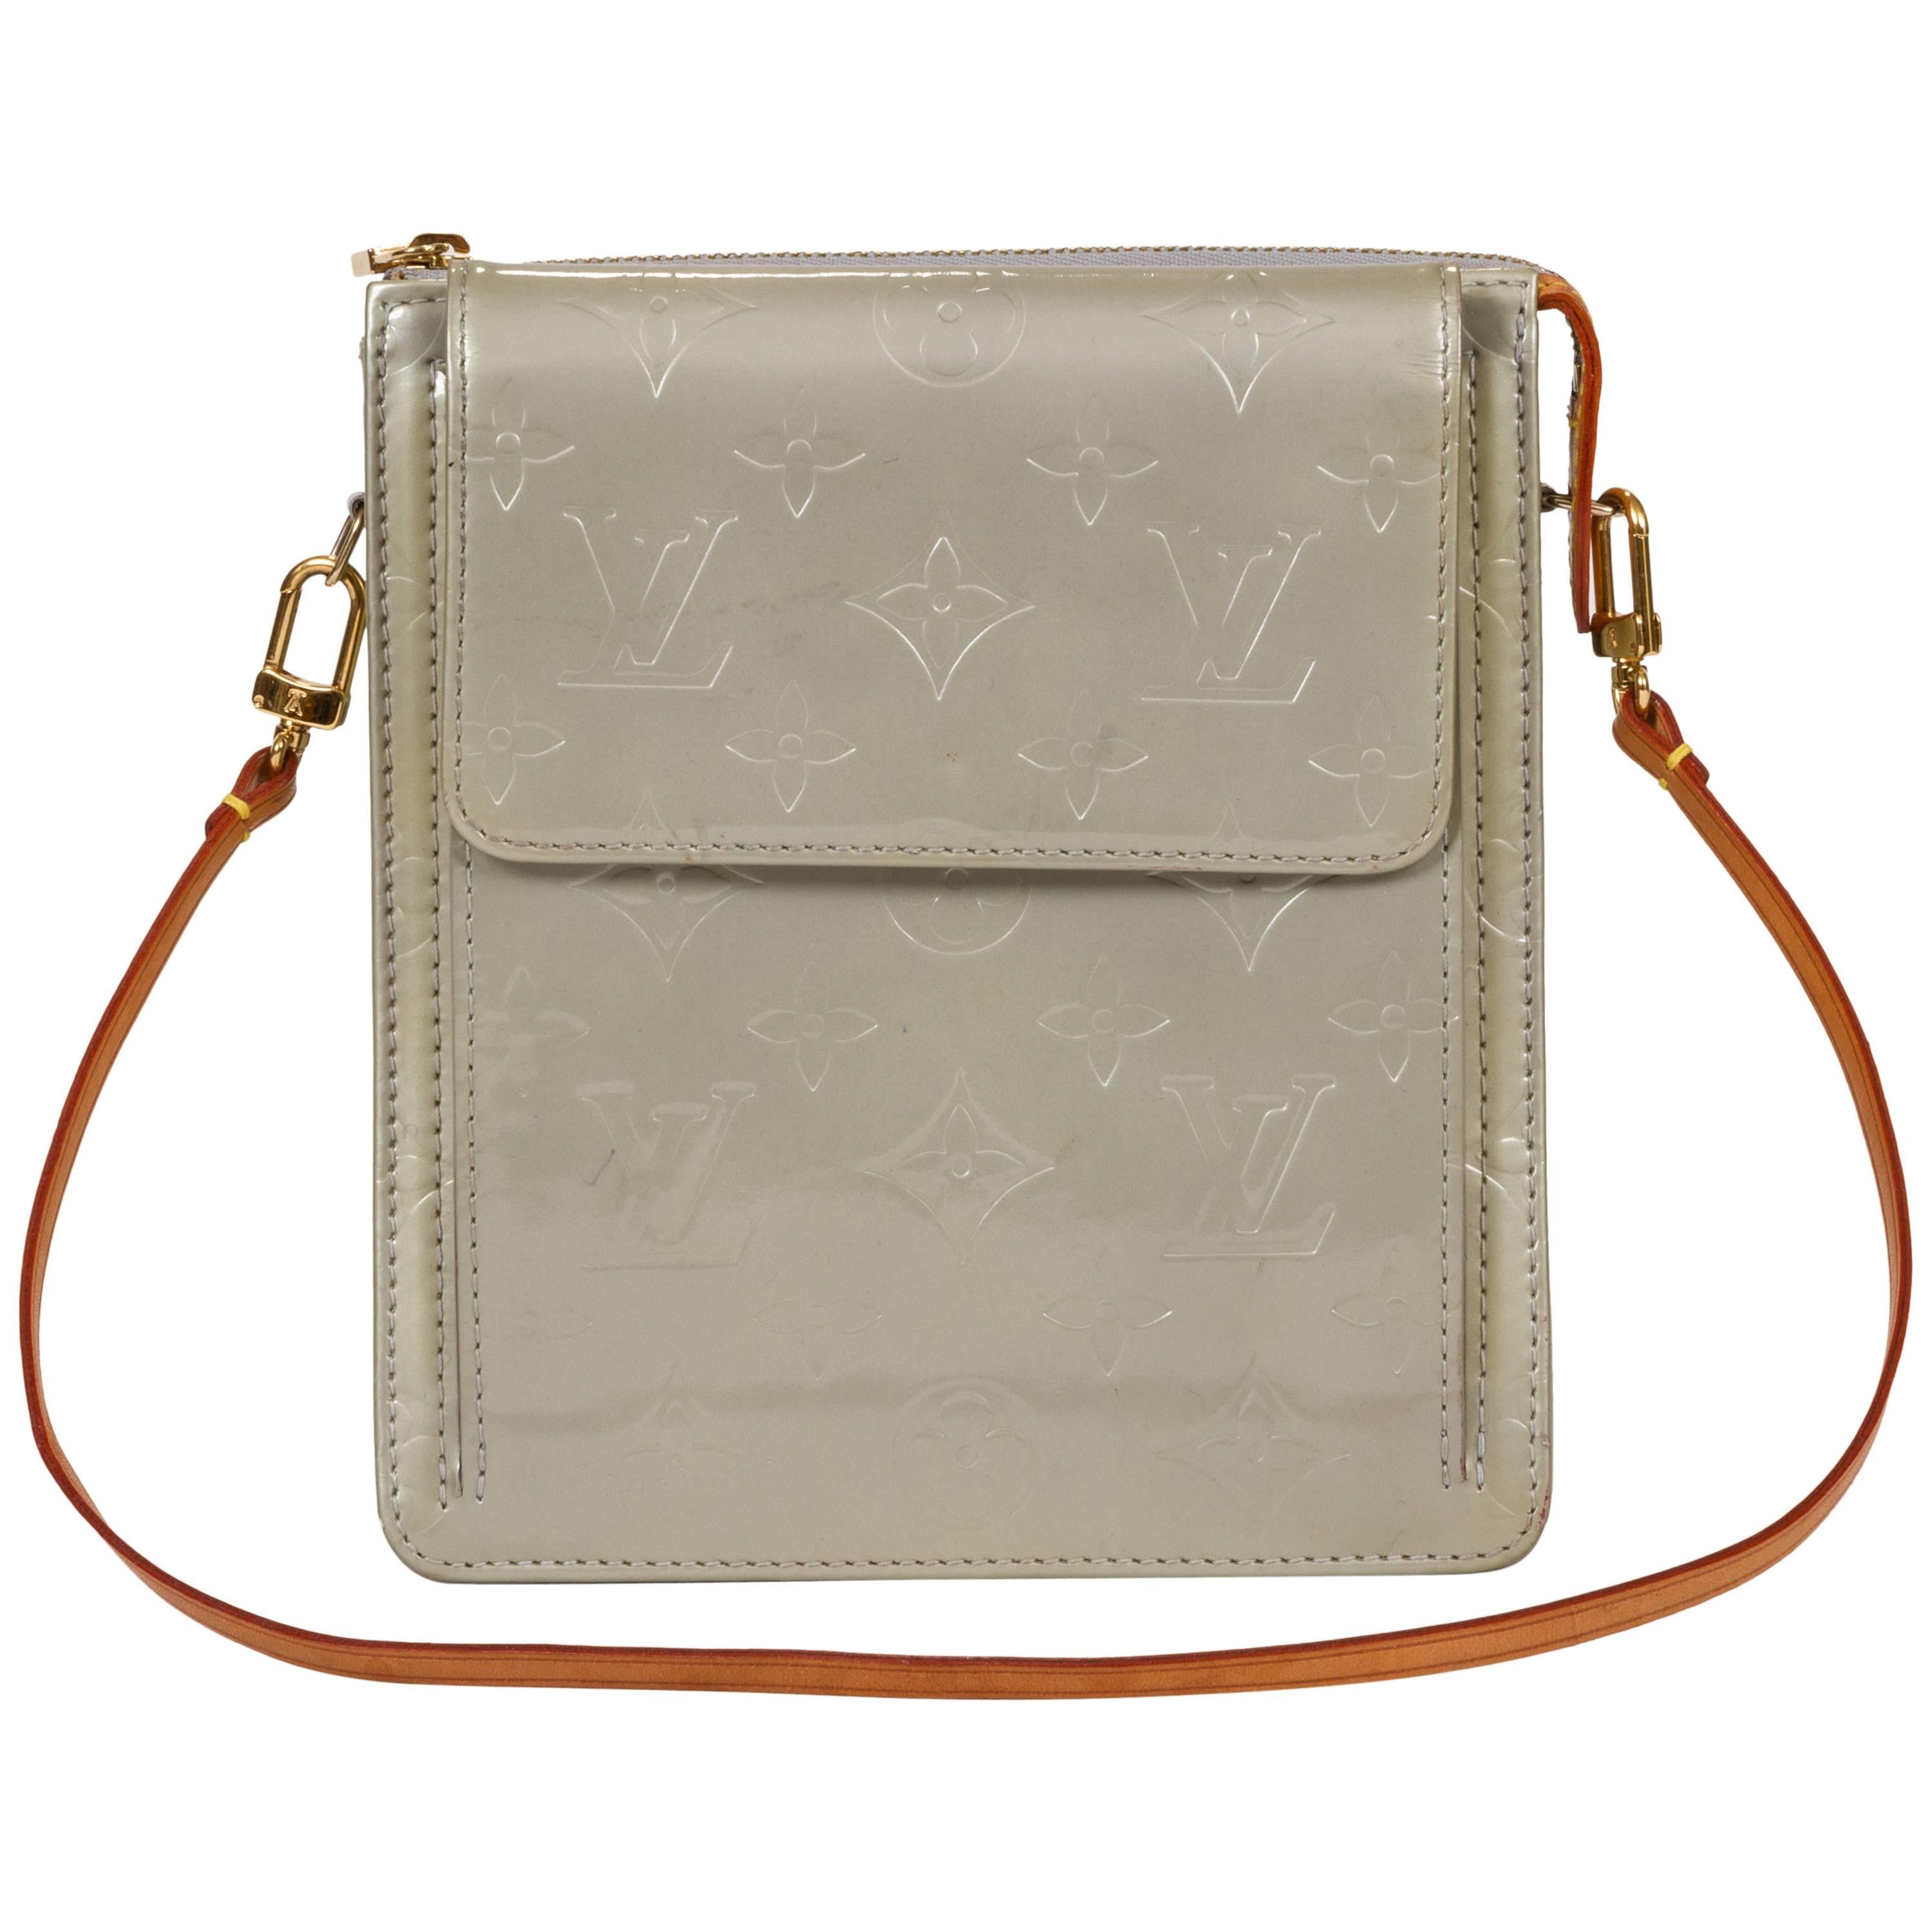 Vuitton Vernis Gray Monogram Bag